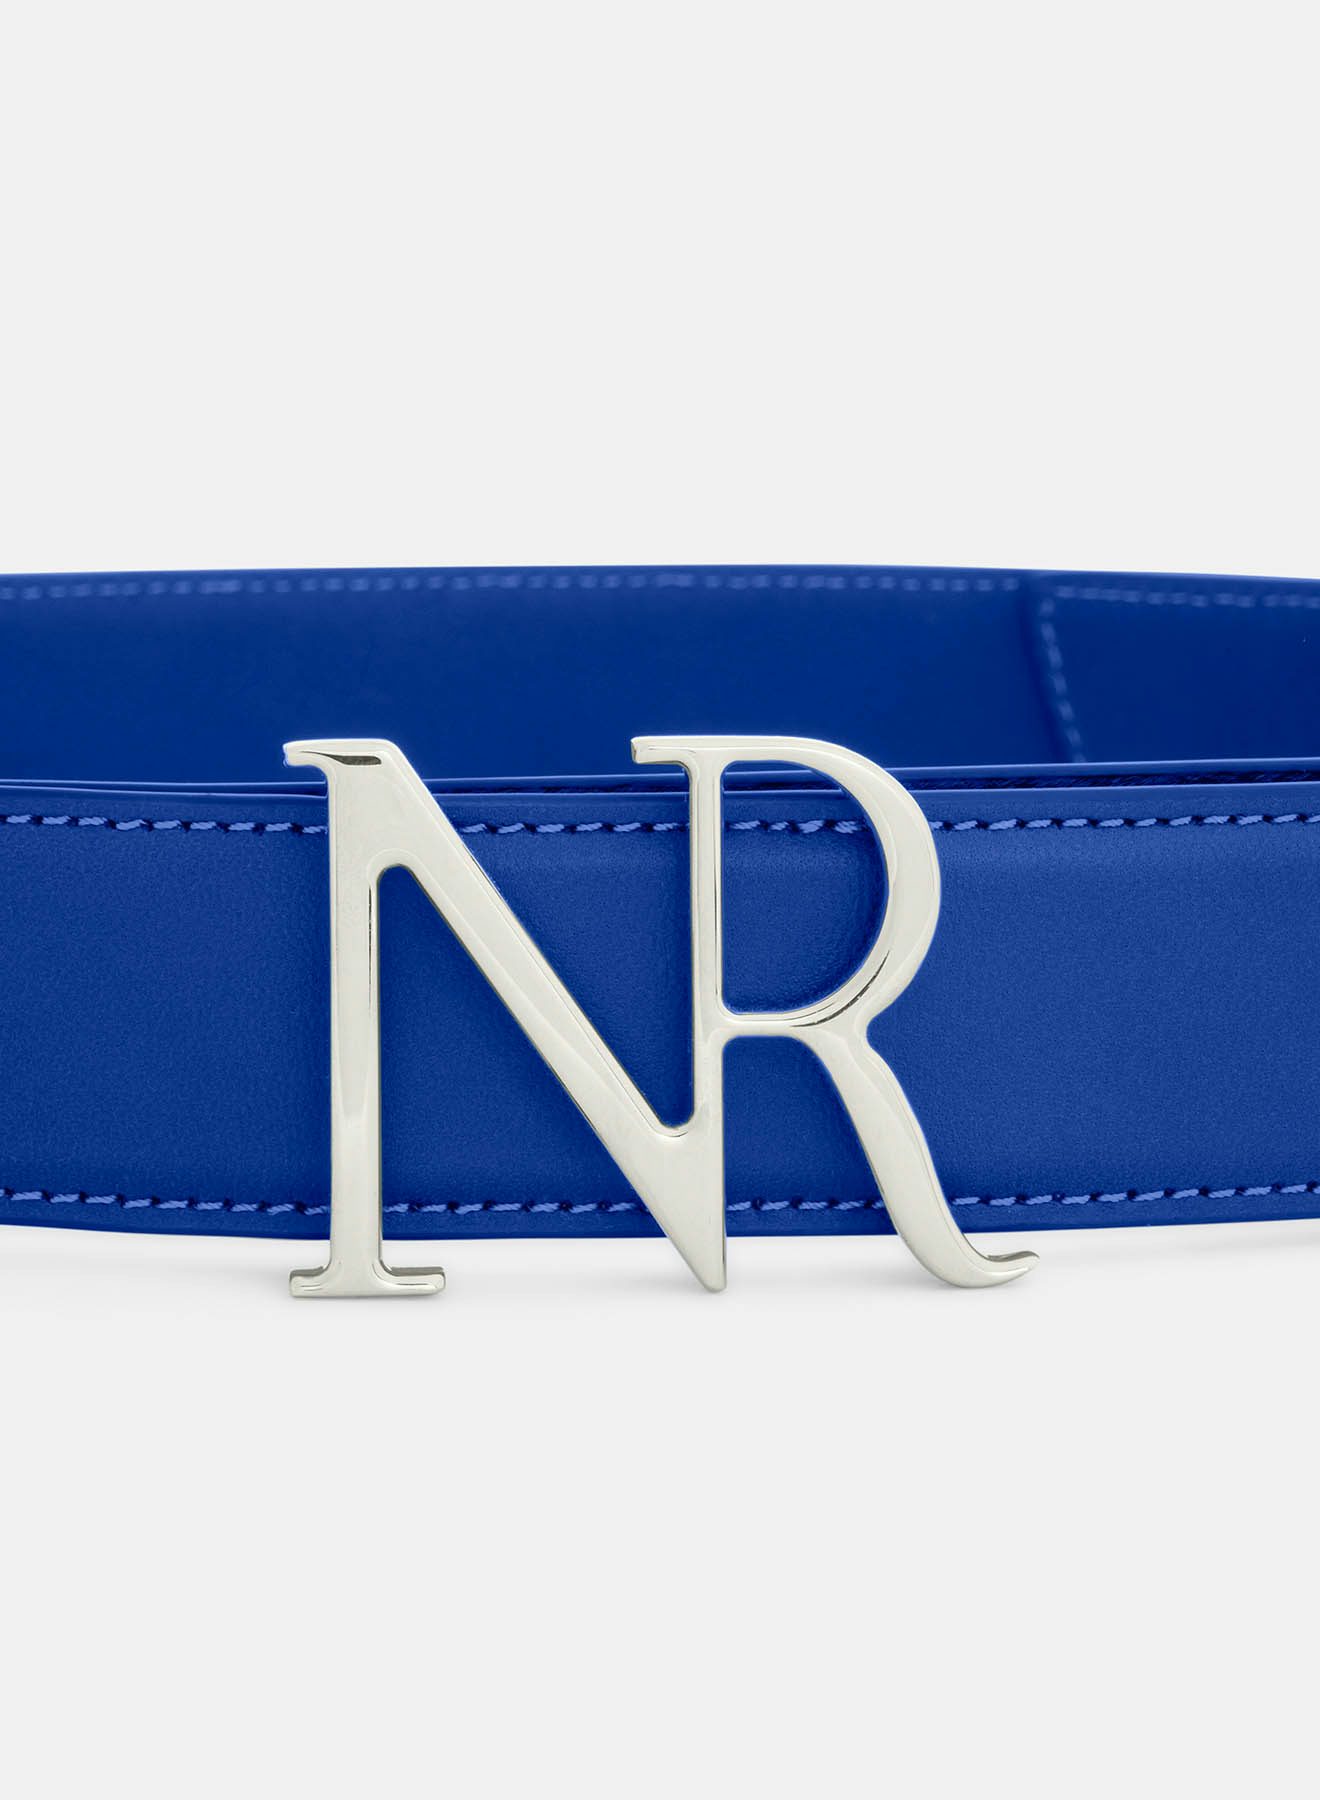 Leather belt klein blue -Nina Ricci